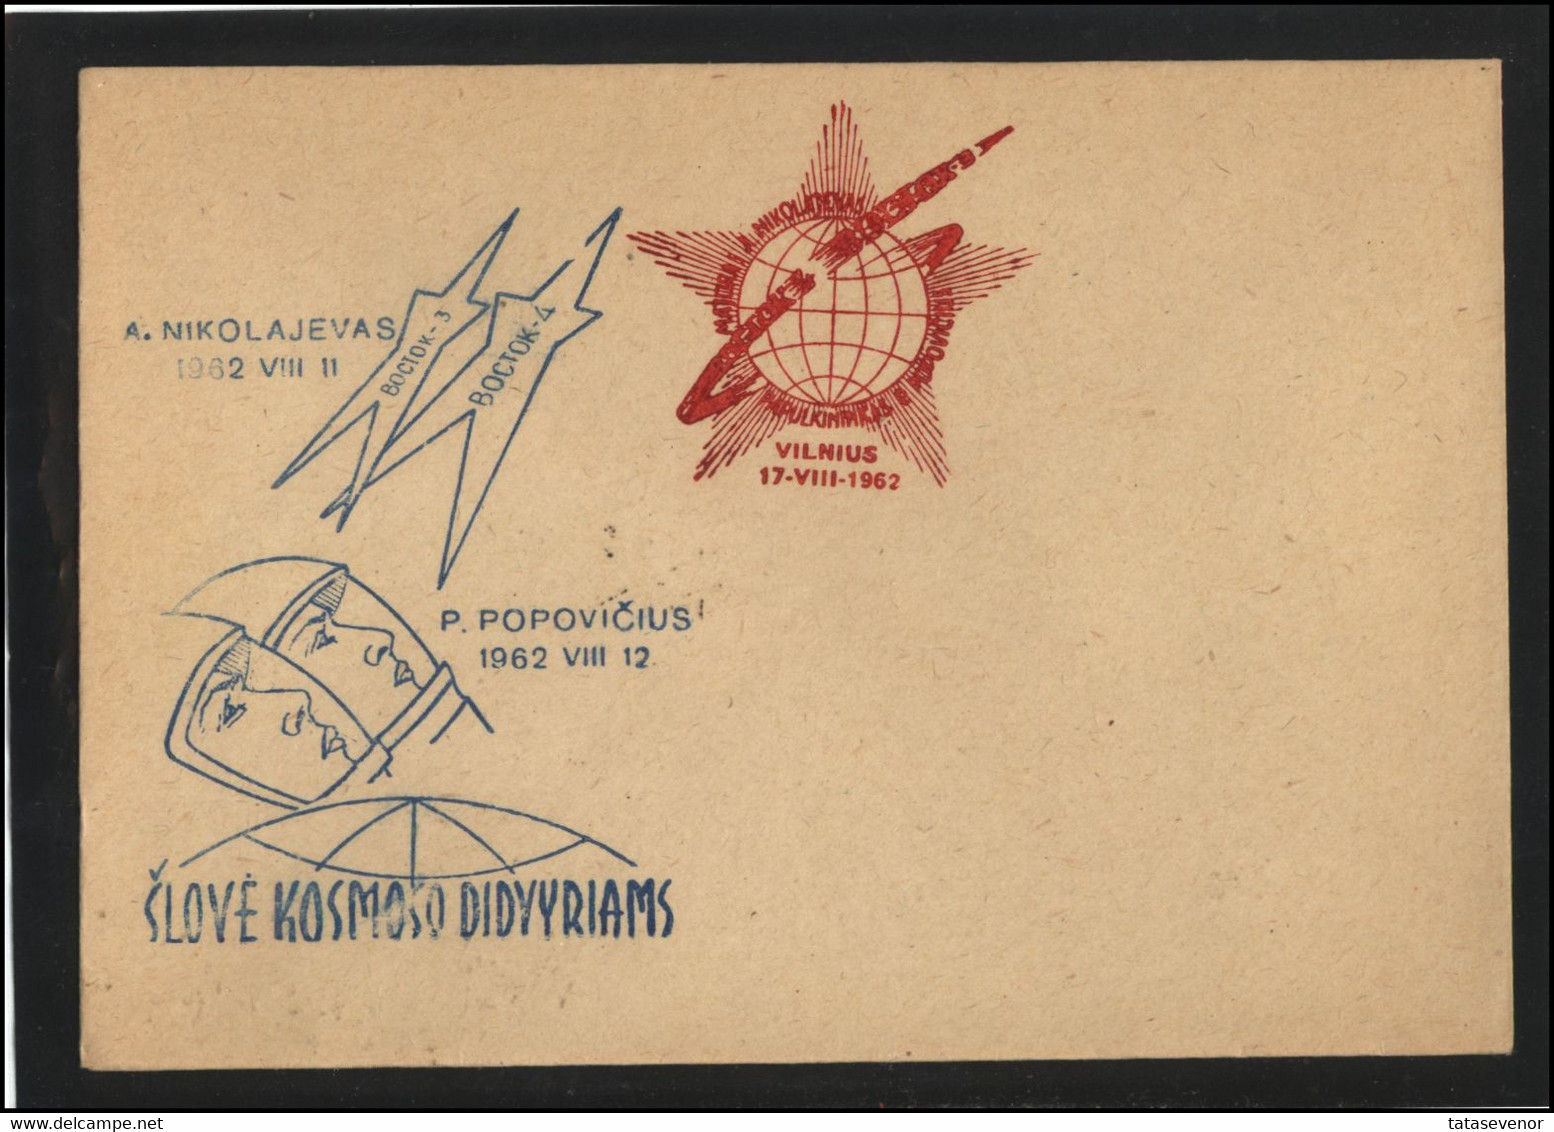 RUSSIA USSR Private Envelope LITHUANIA VILNIUS VNO-klub-052-1 Space Exploration Vostok-3 Vostok-4 Anniversary - Local & Private